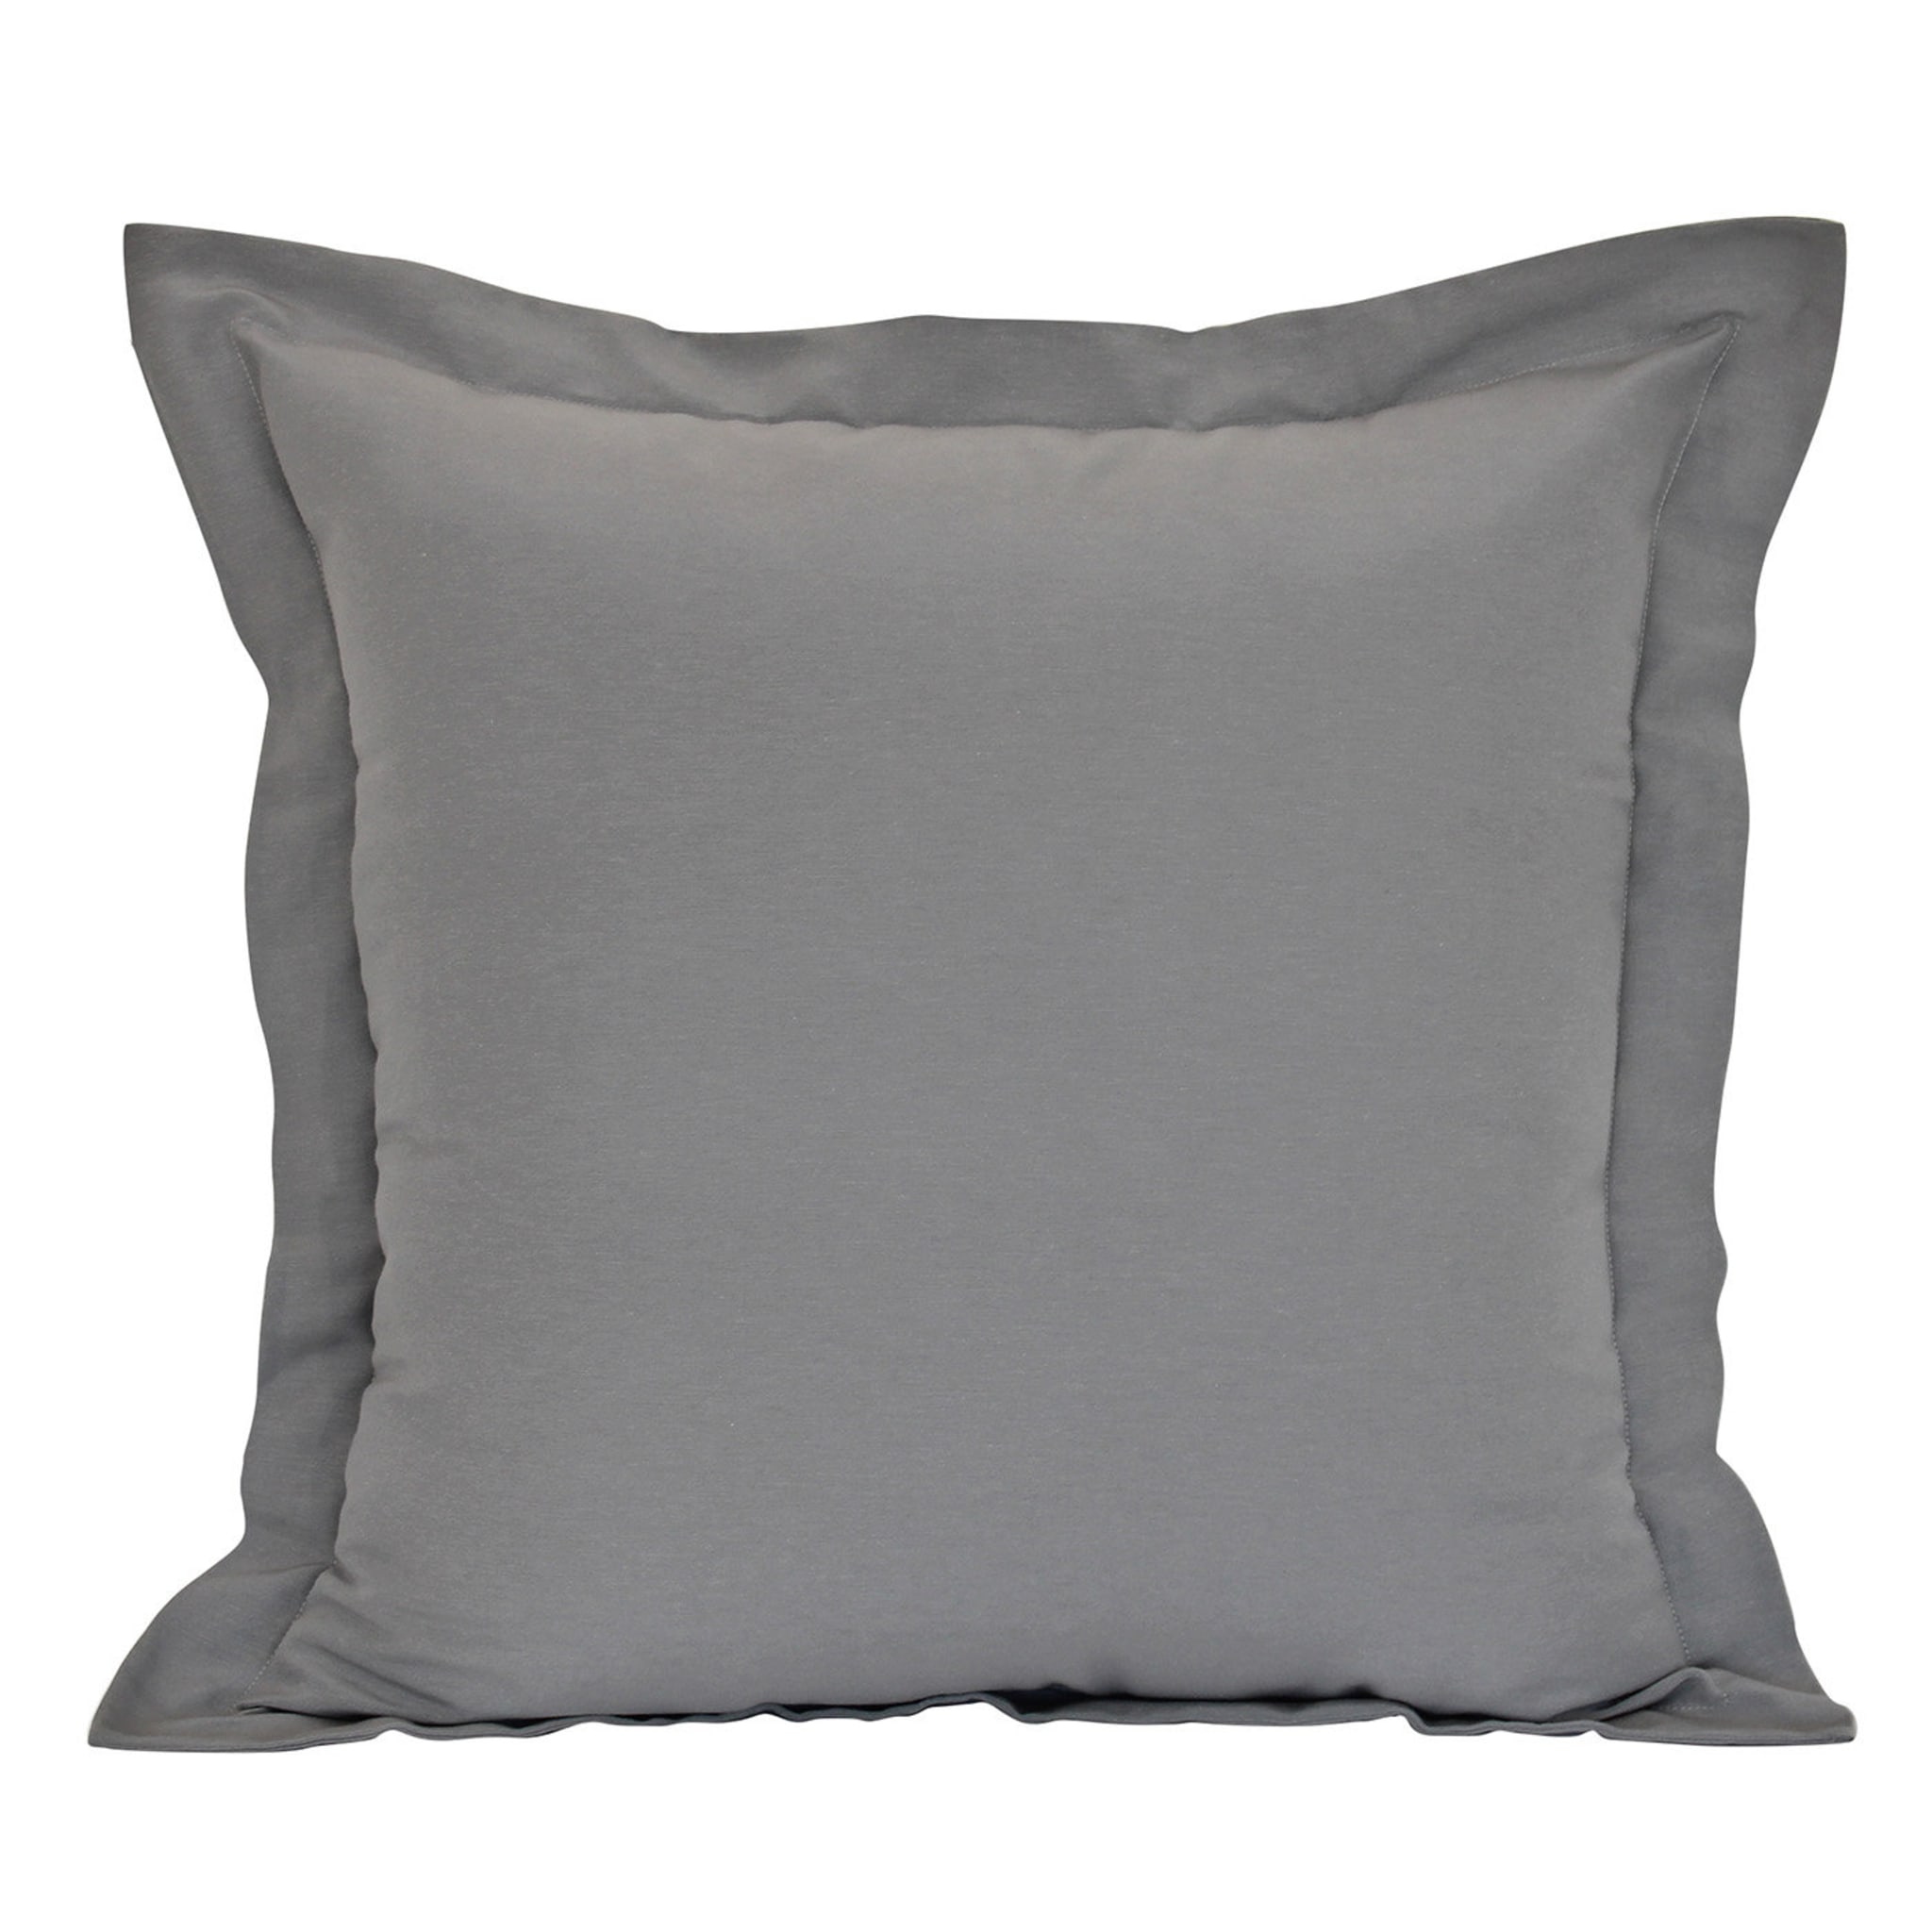 Set of 2 Large Gray Cushions - Main view